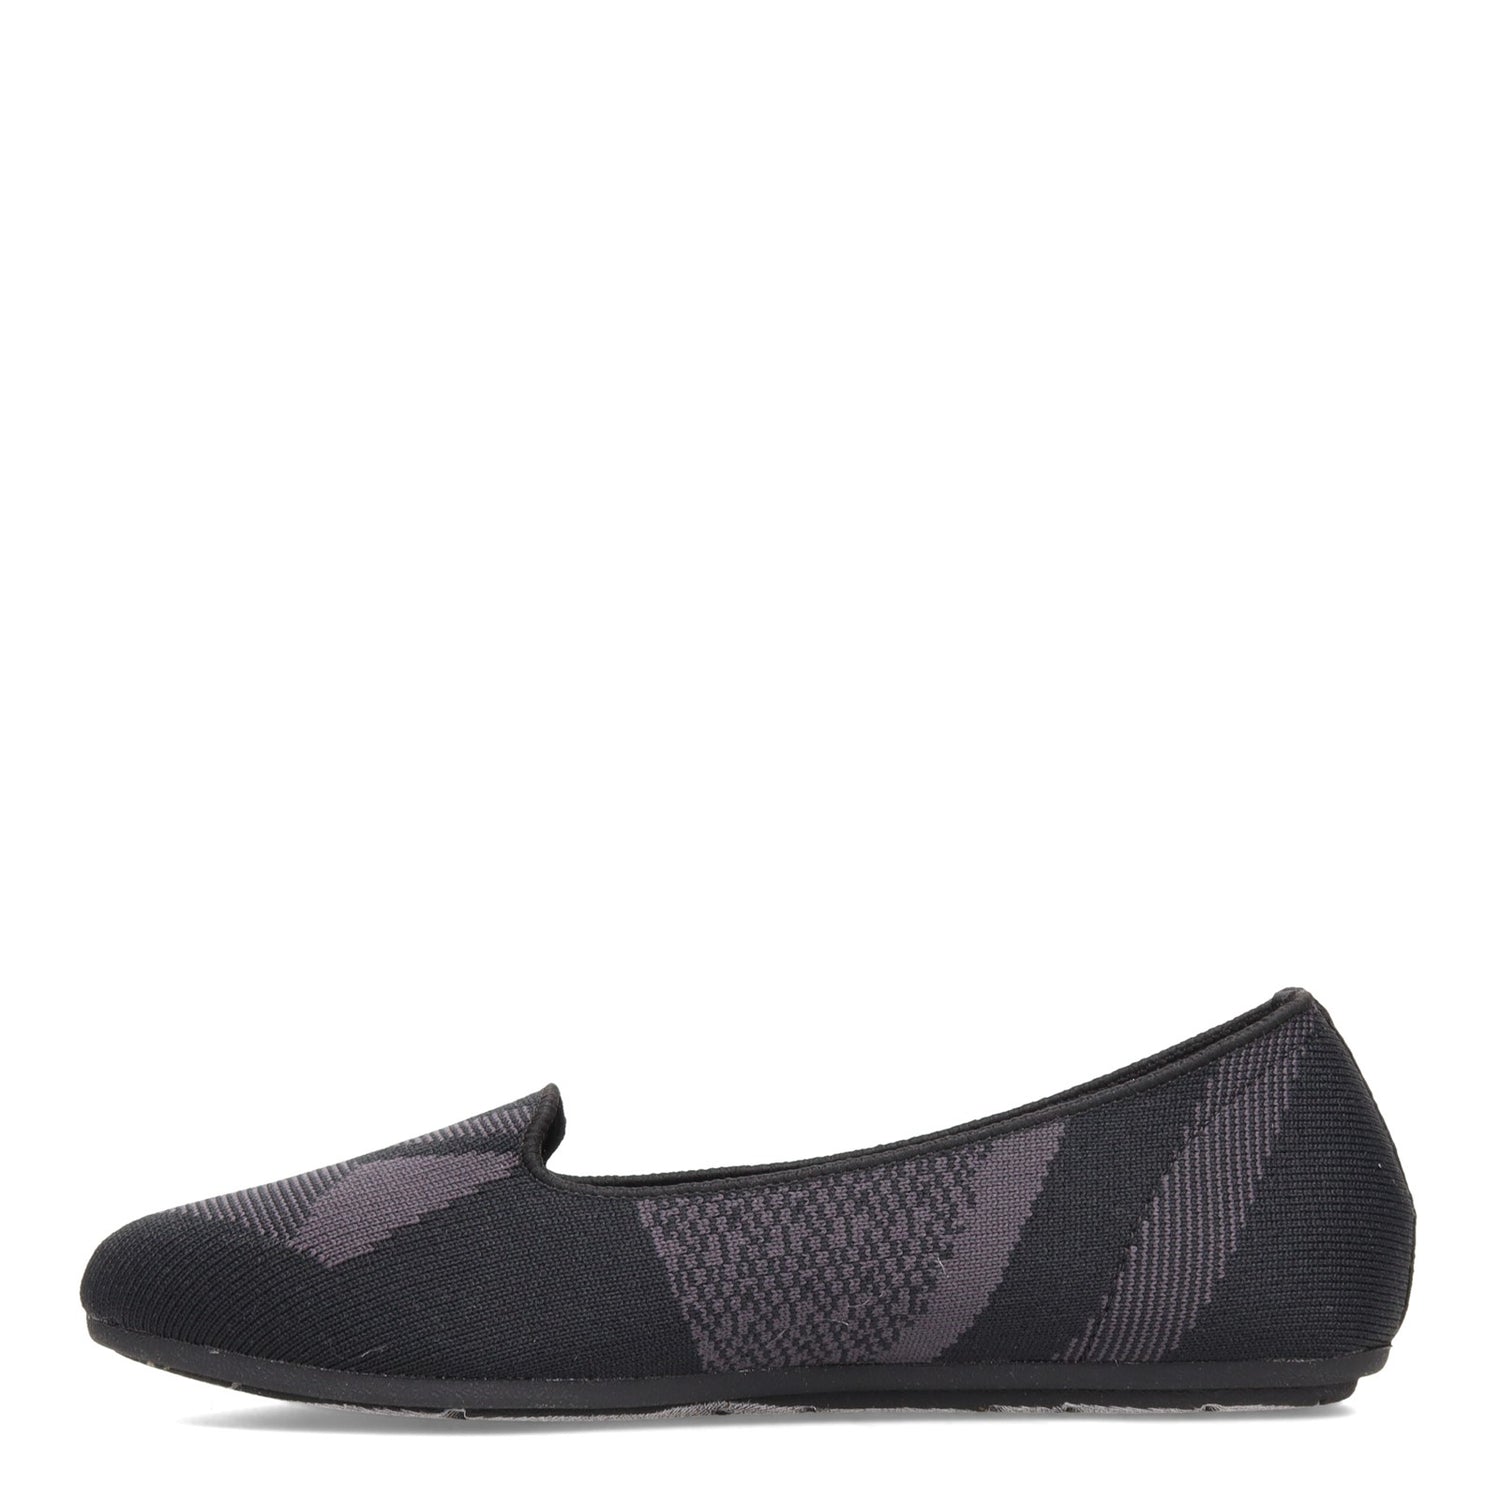 Peltz Shoes  Women's Skechers Cleo 2.0 - I'm Impressed Flat Black/Charcoal 158344-BKCC